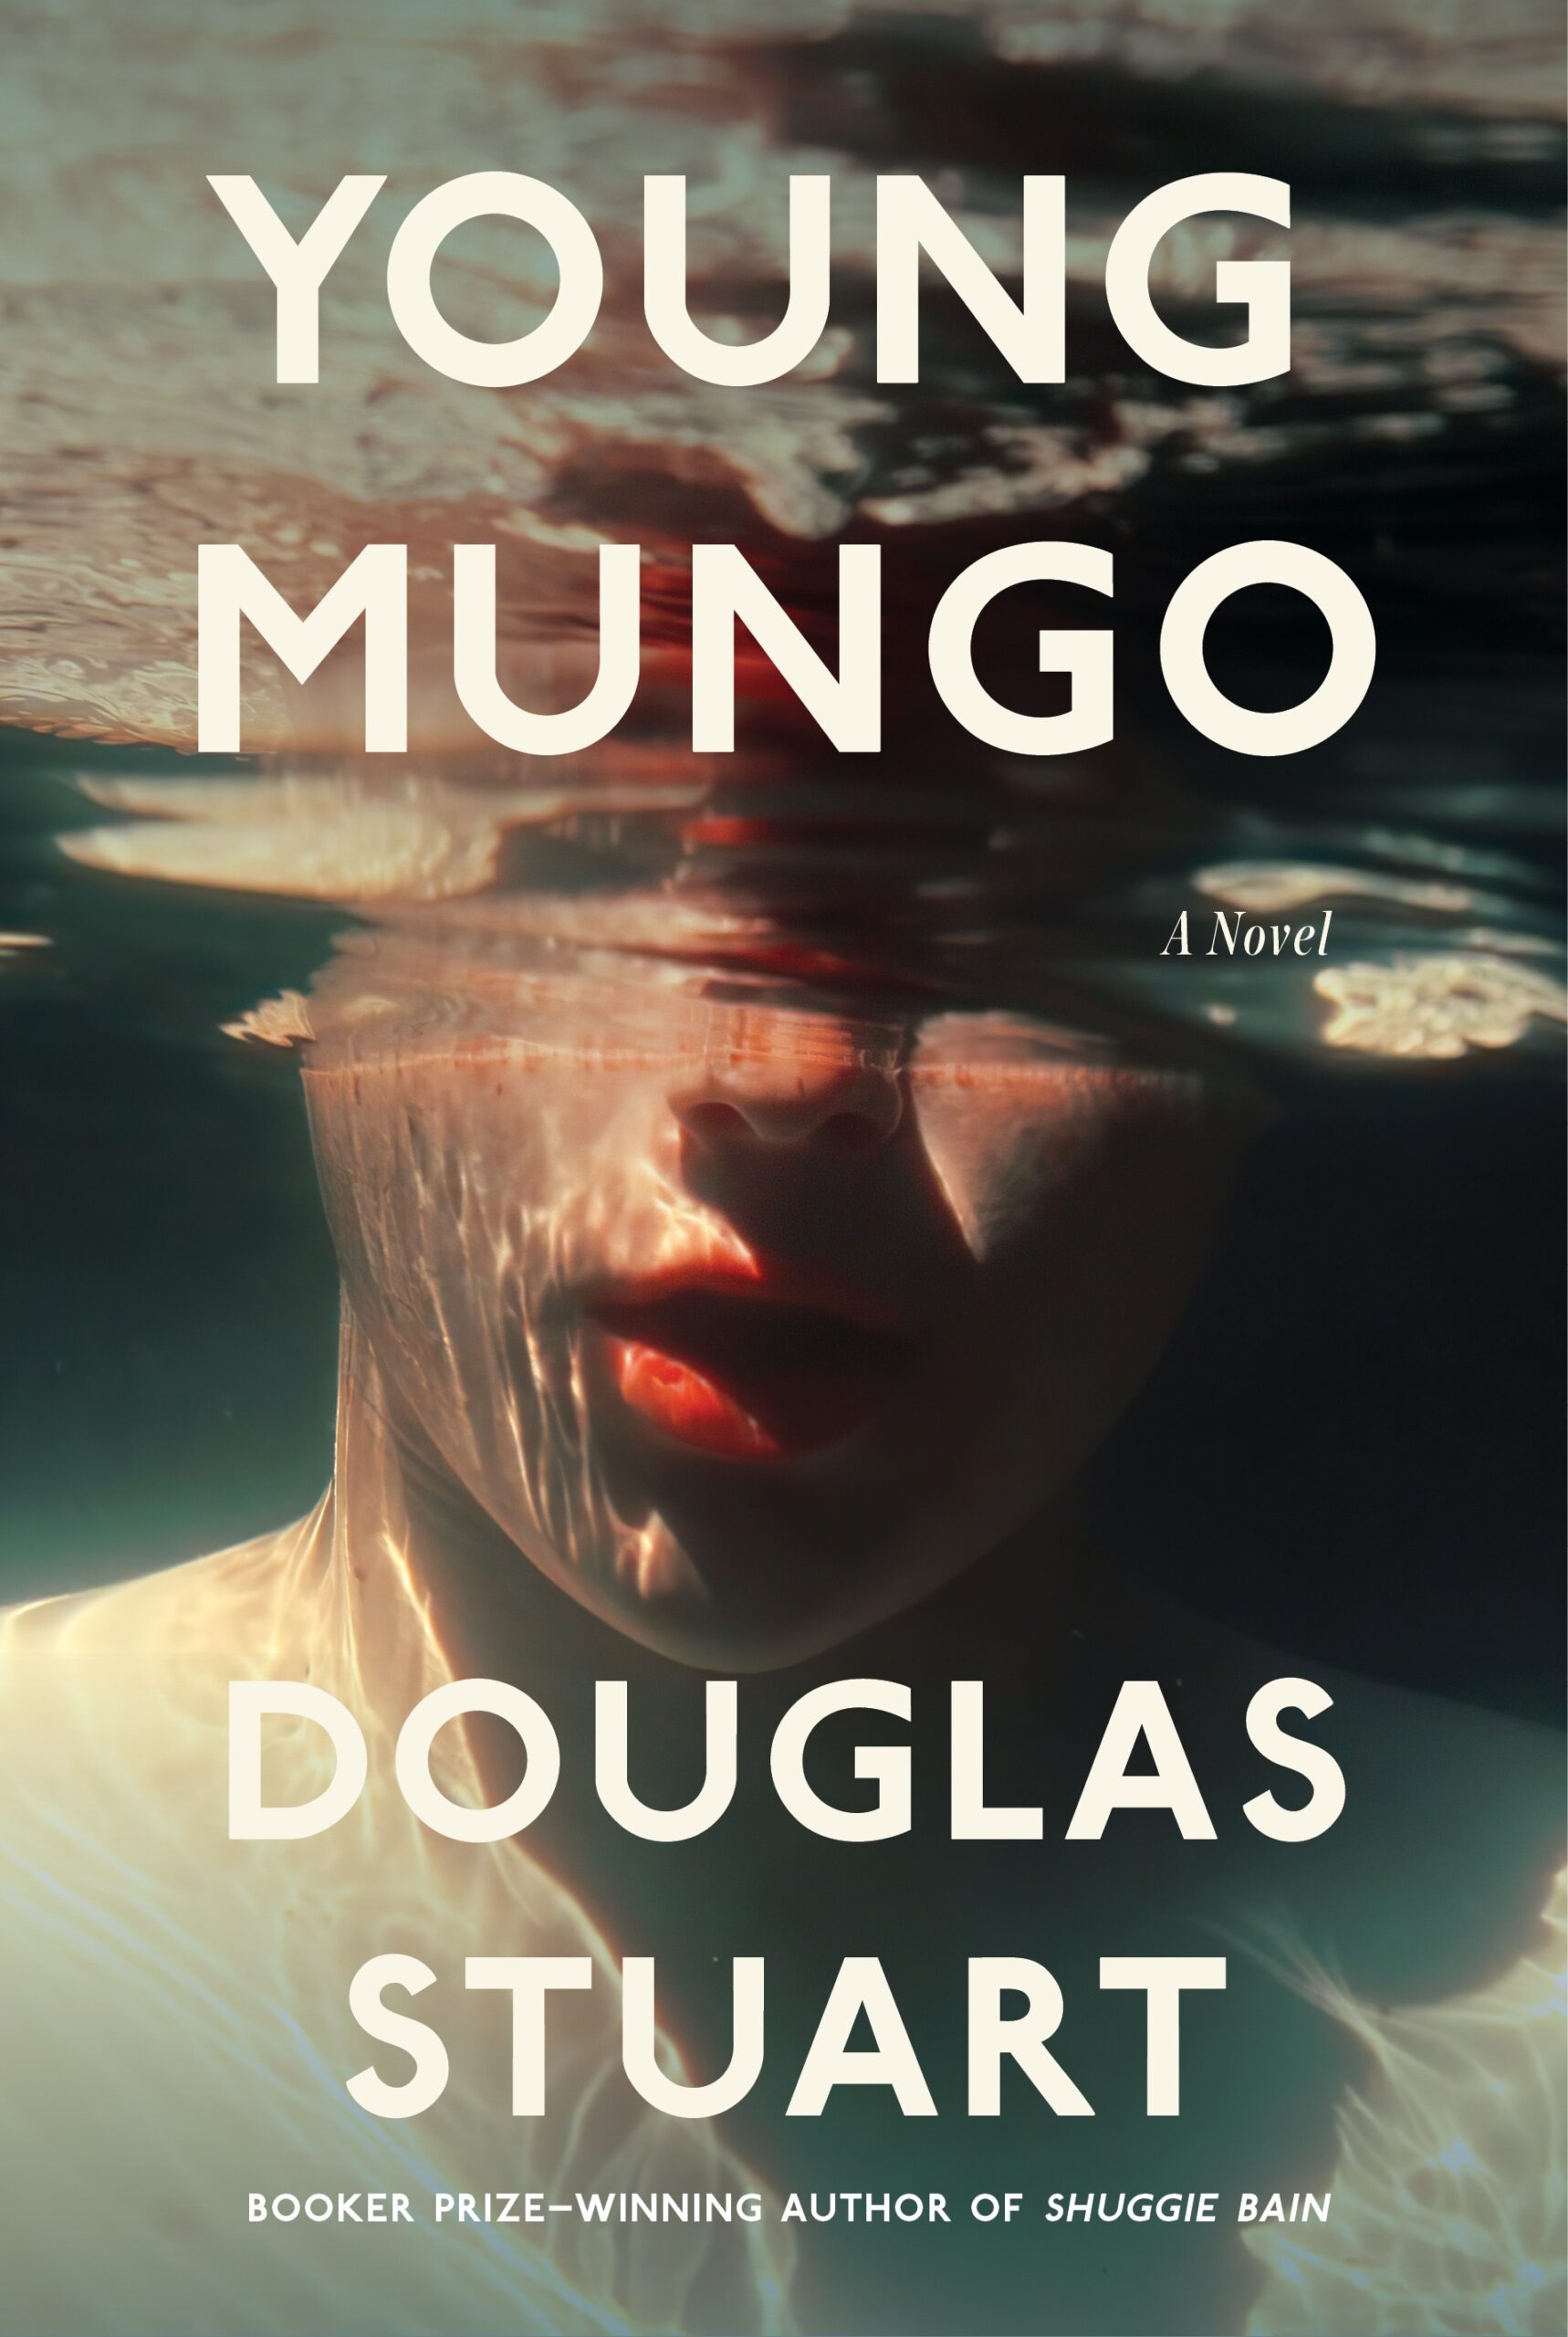 Douglas Stuart's Young Mungo book cover